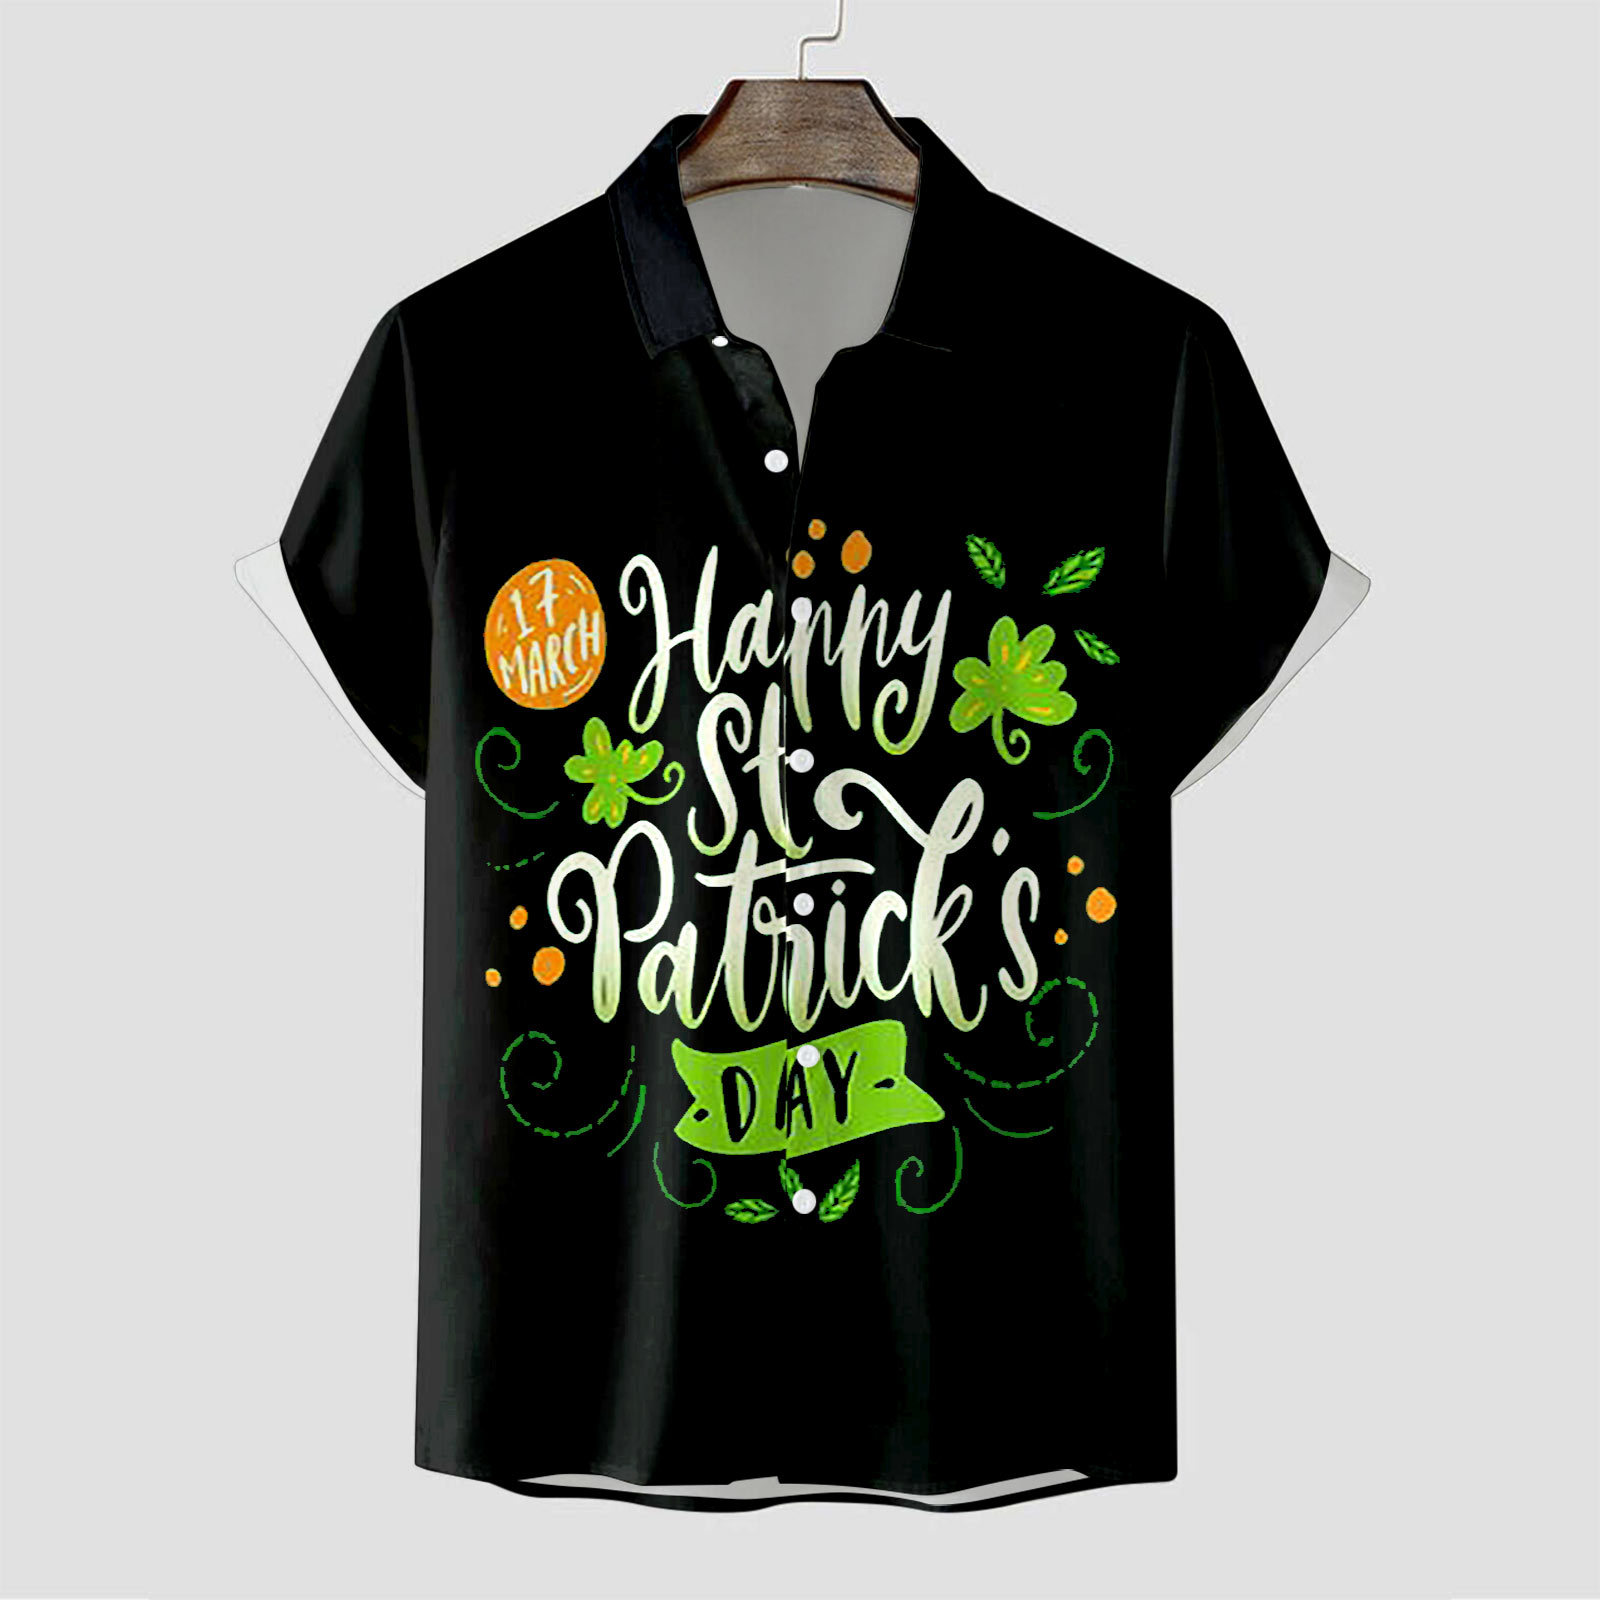 Fashionable Men's Short Sleeve St. Patrick Print Shirt